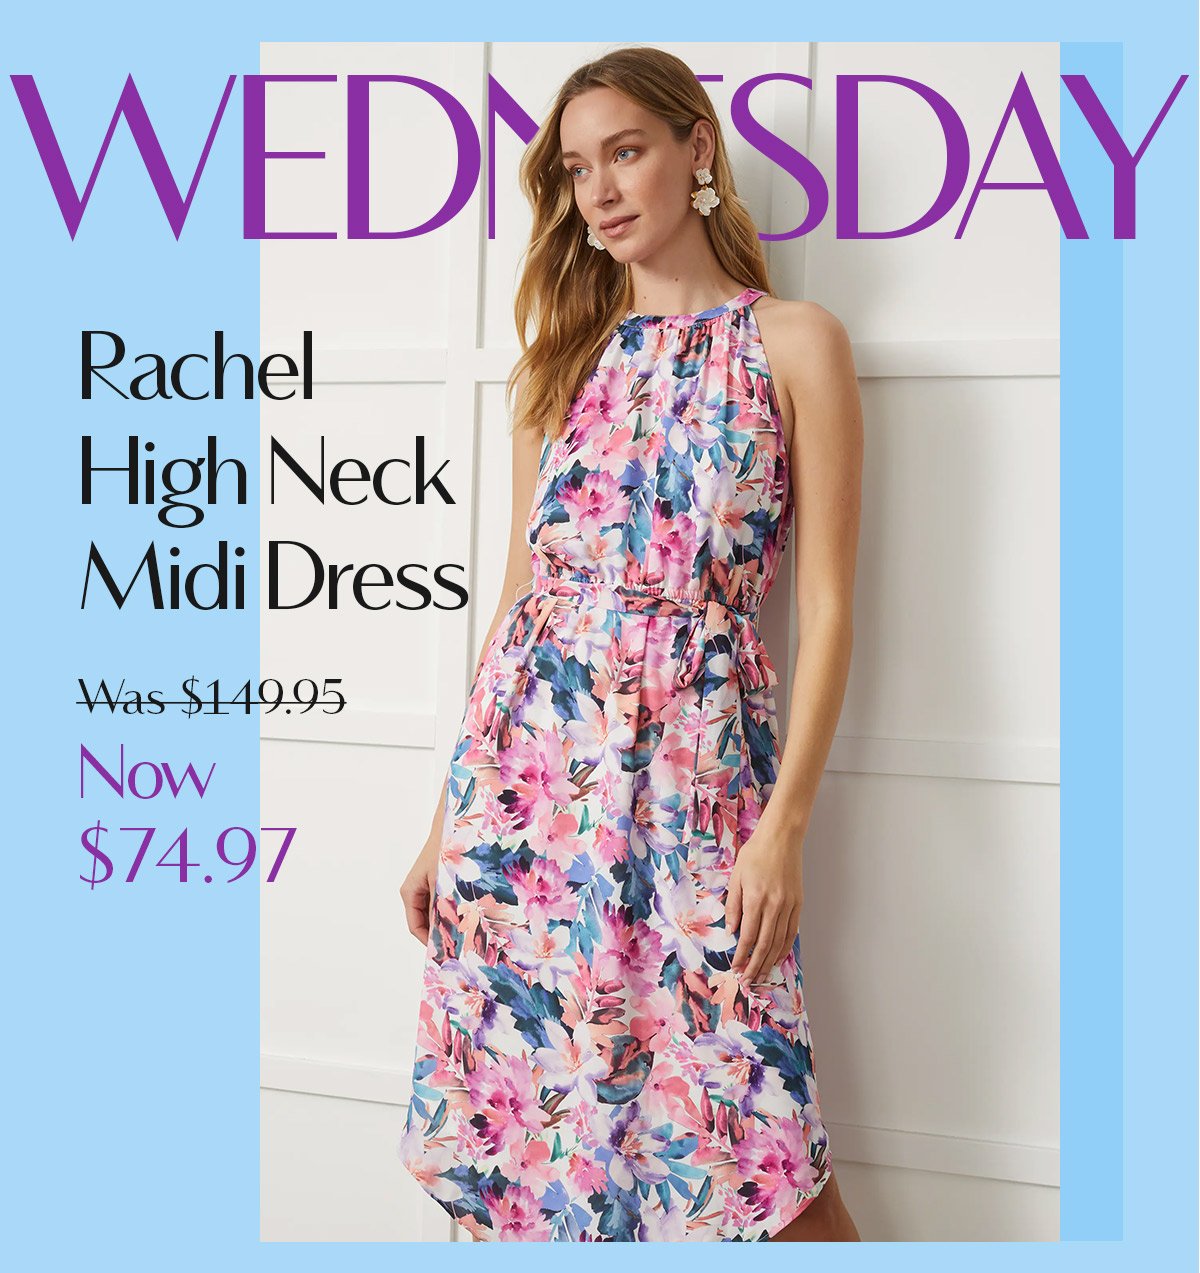 Rachel High Neck Midi Dress Was $149.95 Now $74.97